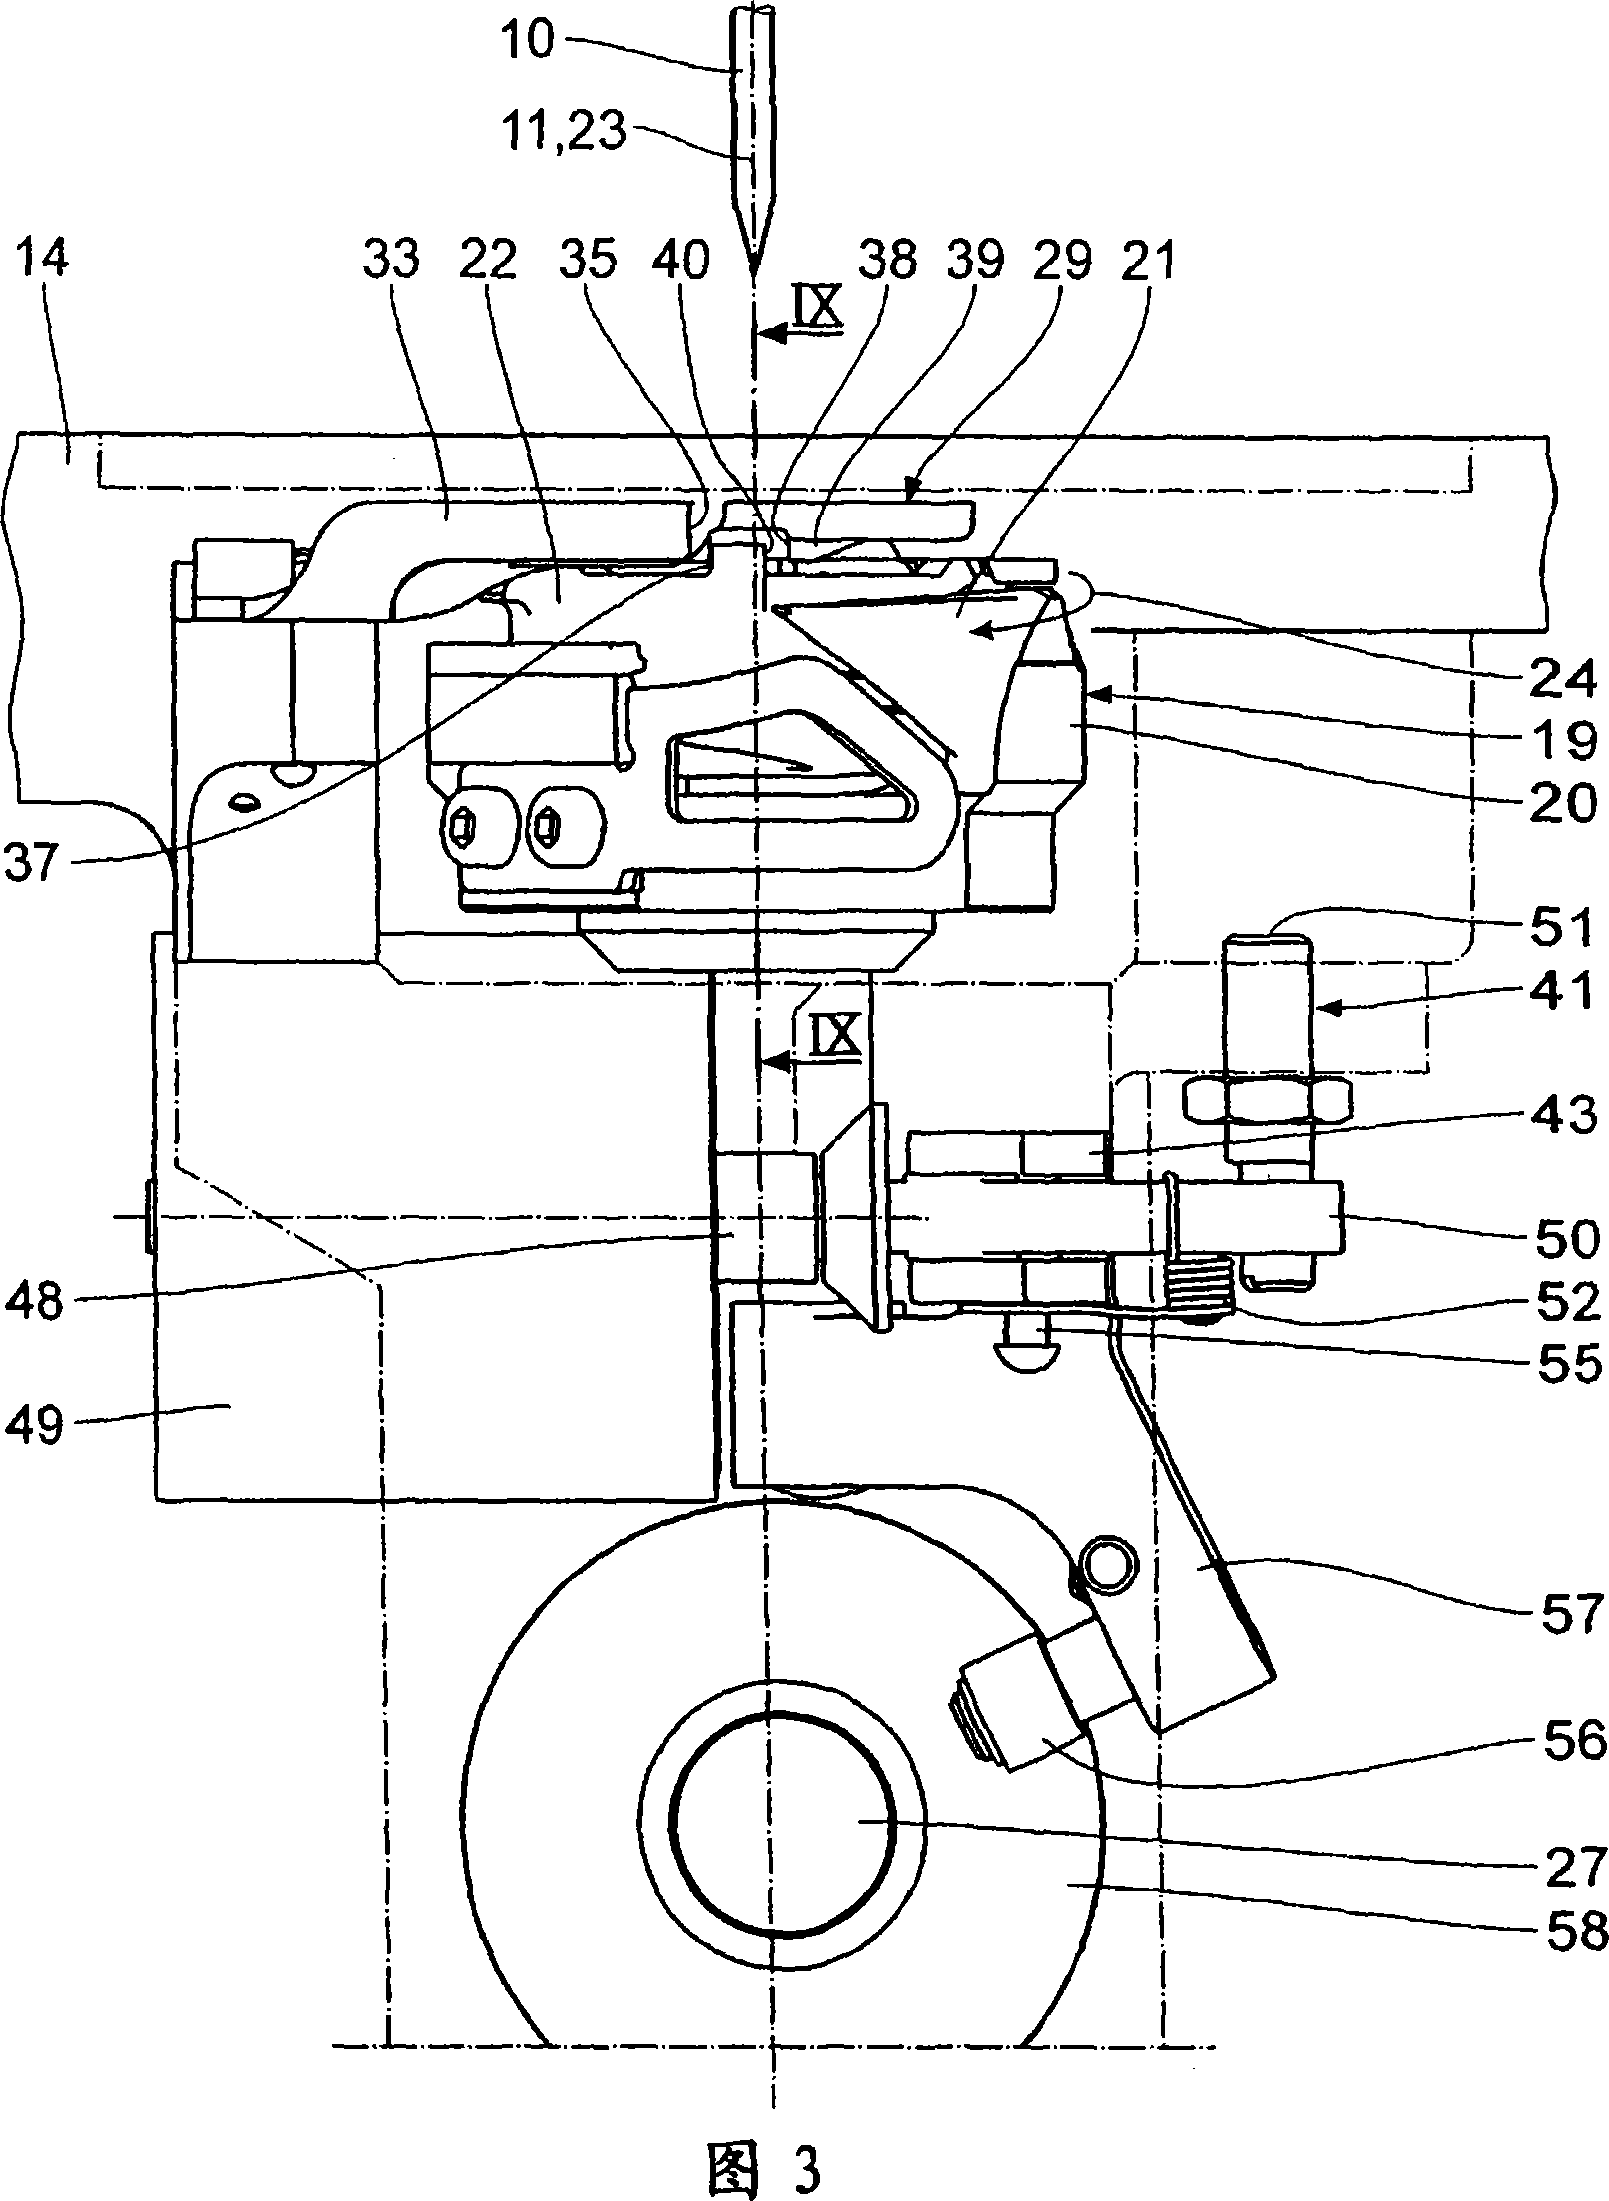 Lock-type chain stitch sewing machine